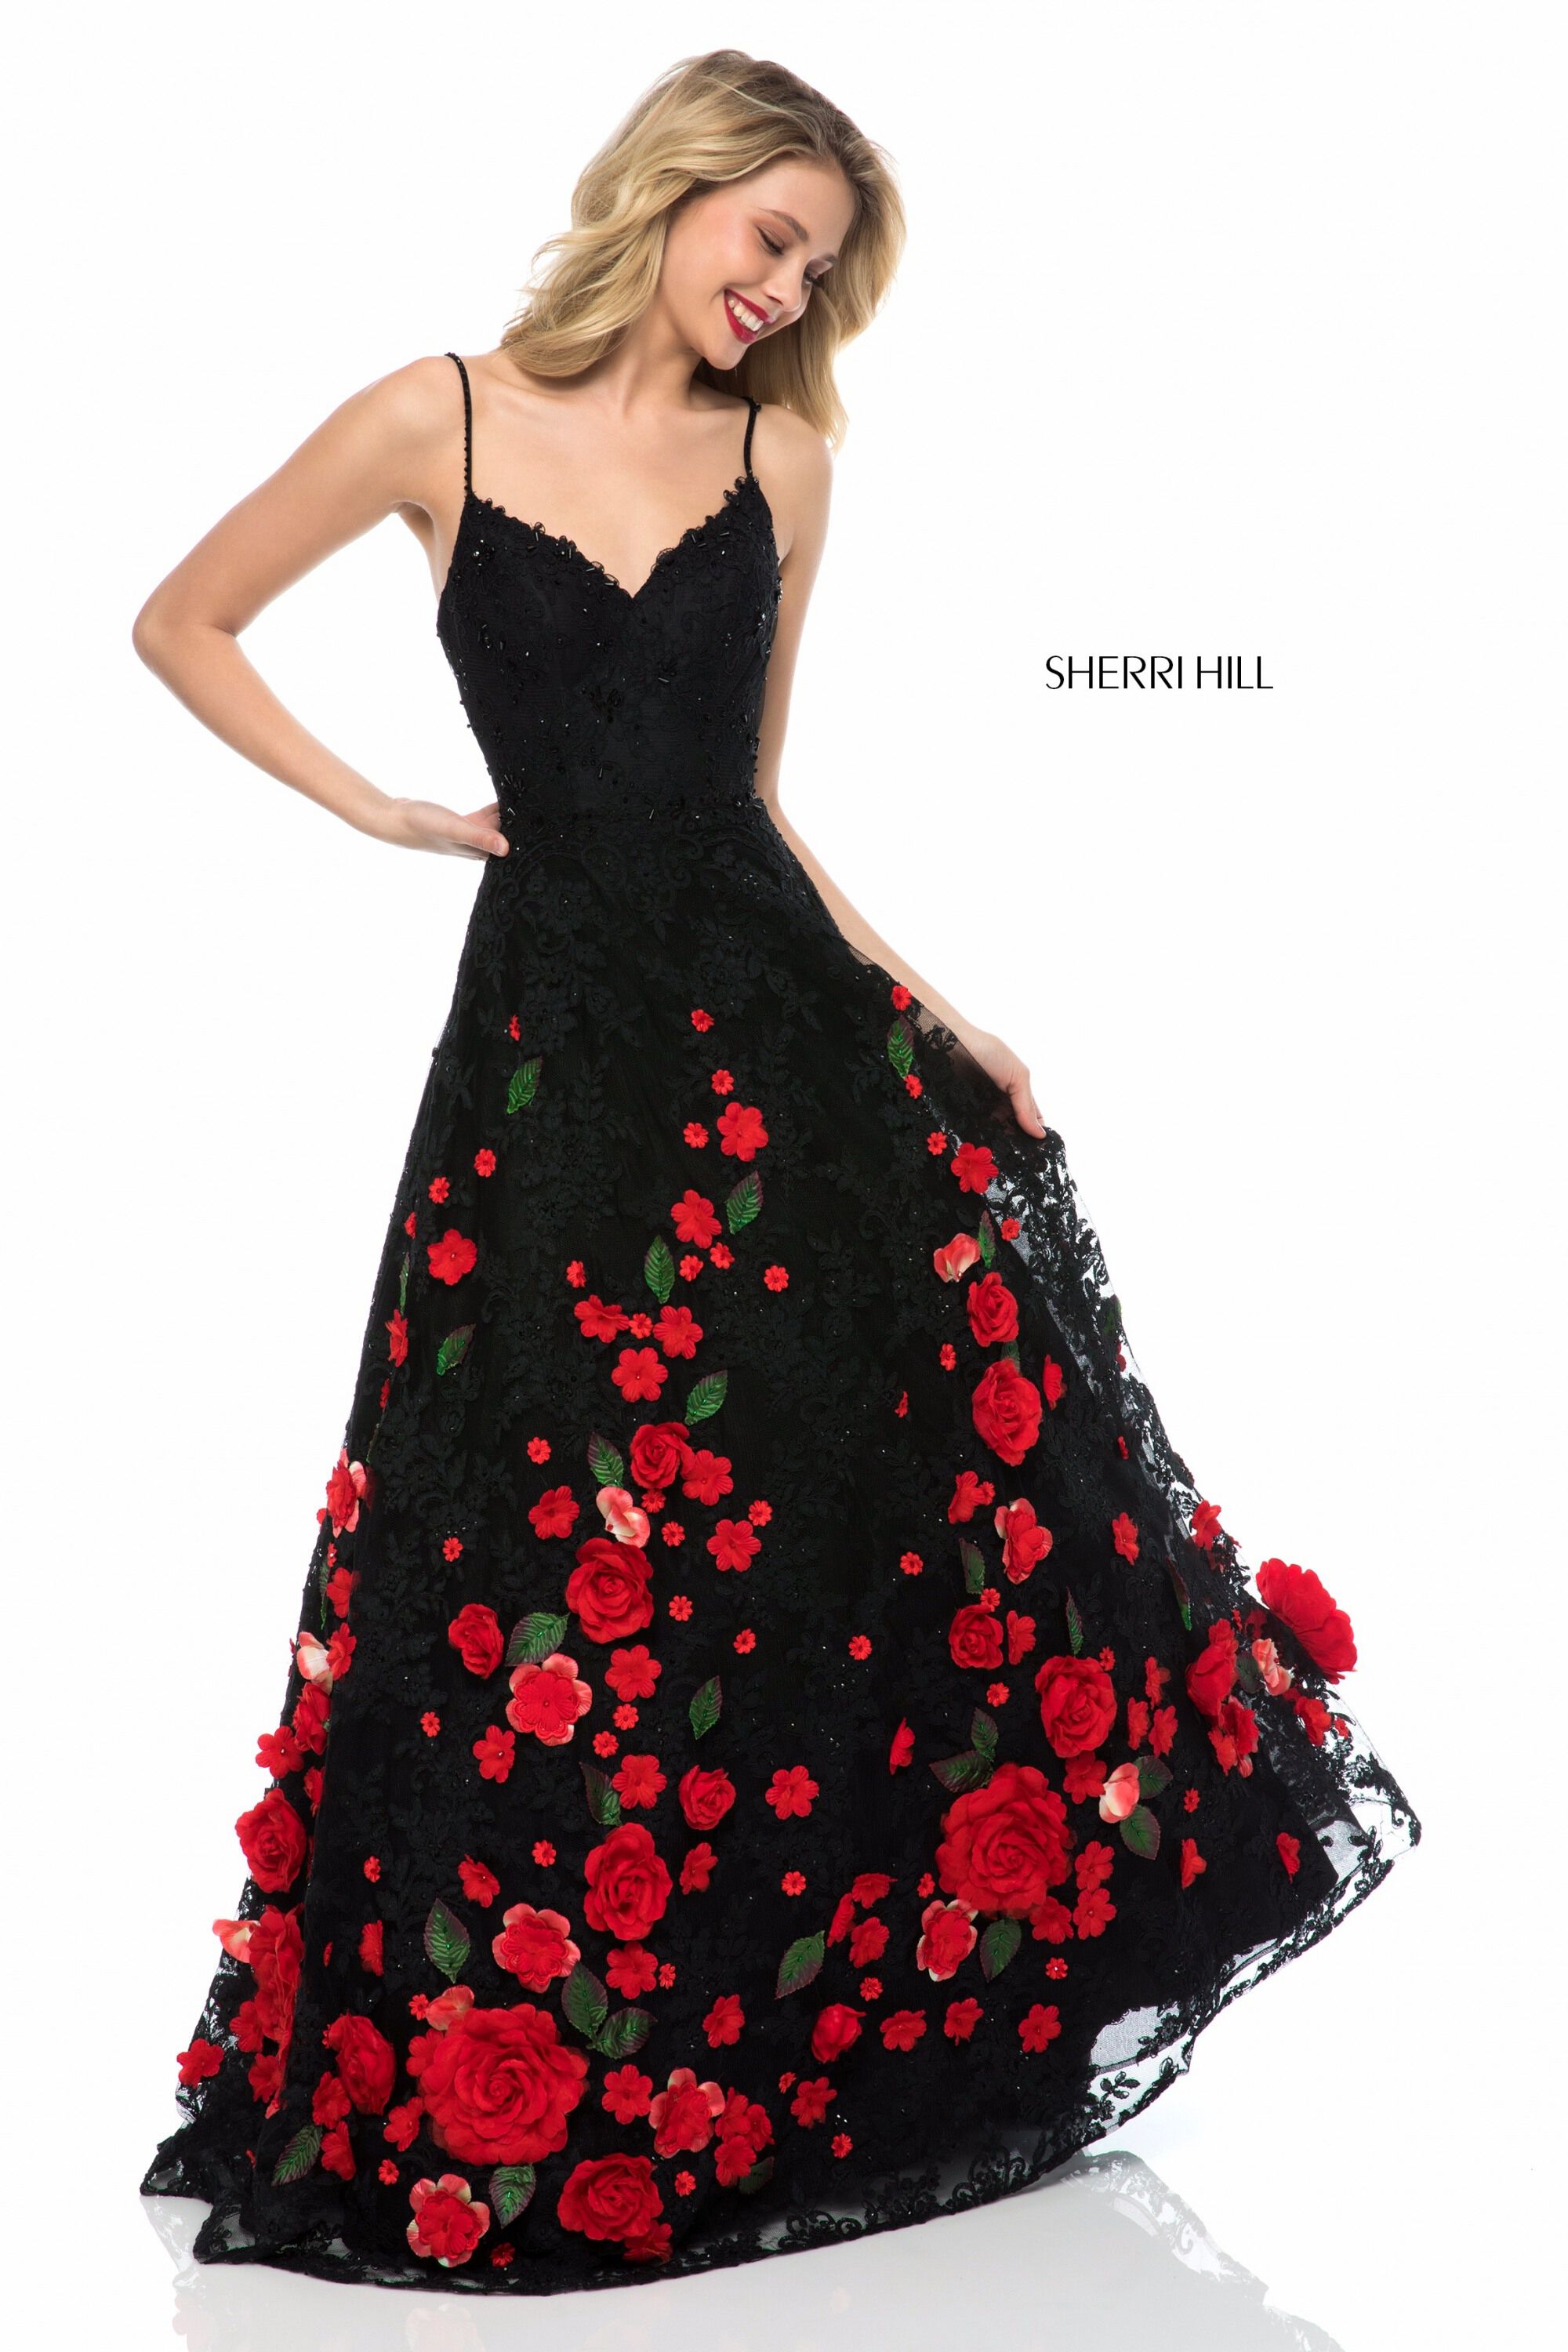 sherri hill roses dress